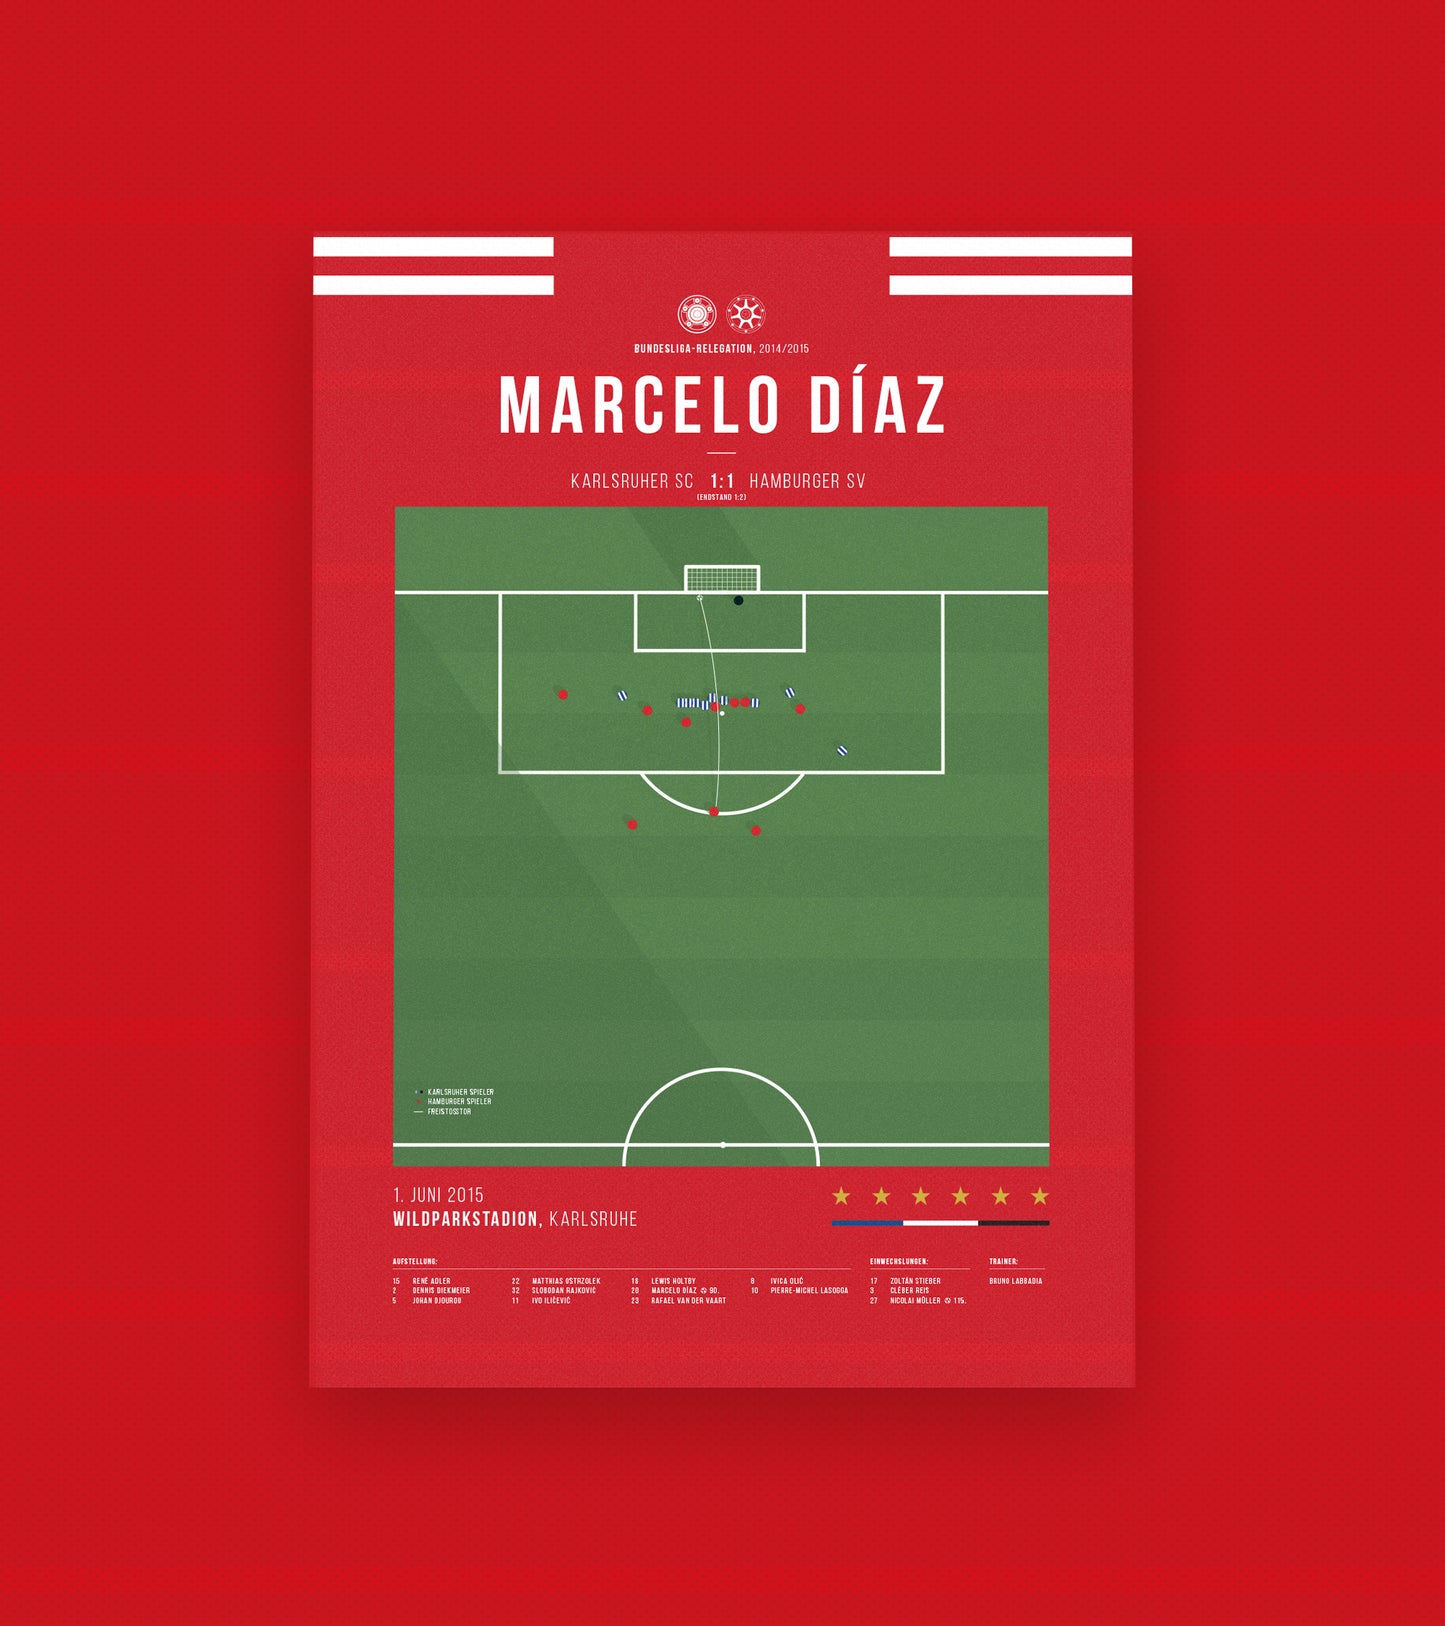 "Tomorrow My Friend": Free kick goal from Marcelo Díaz